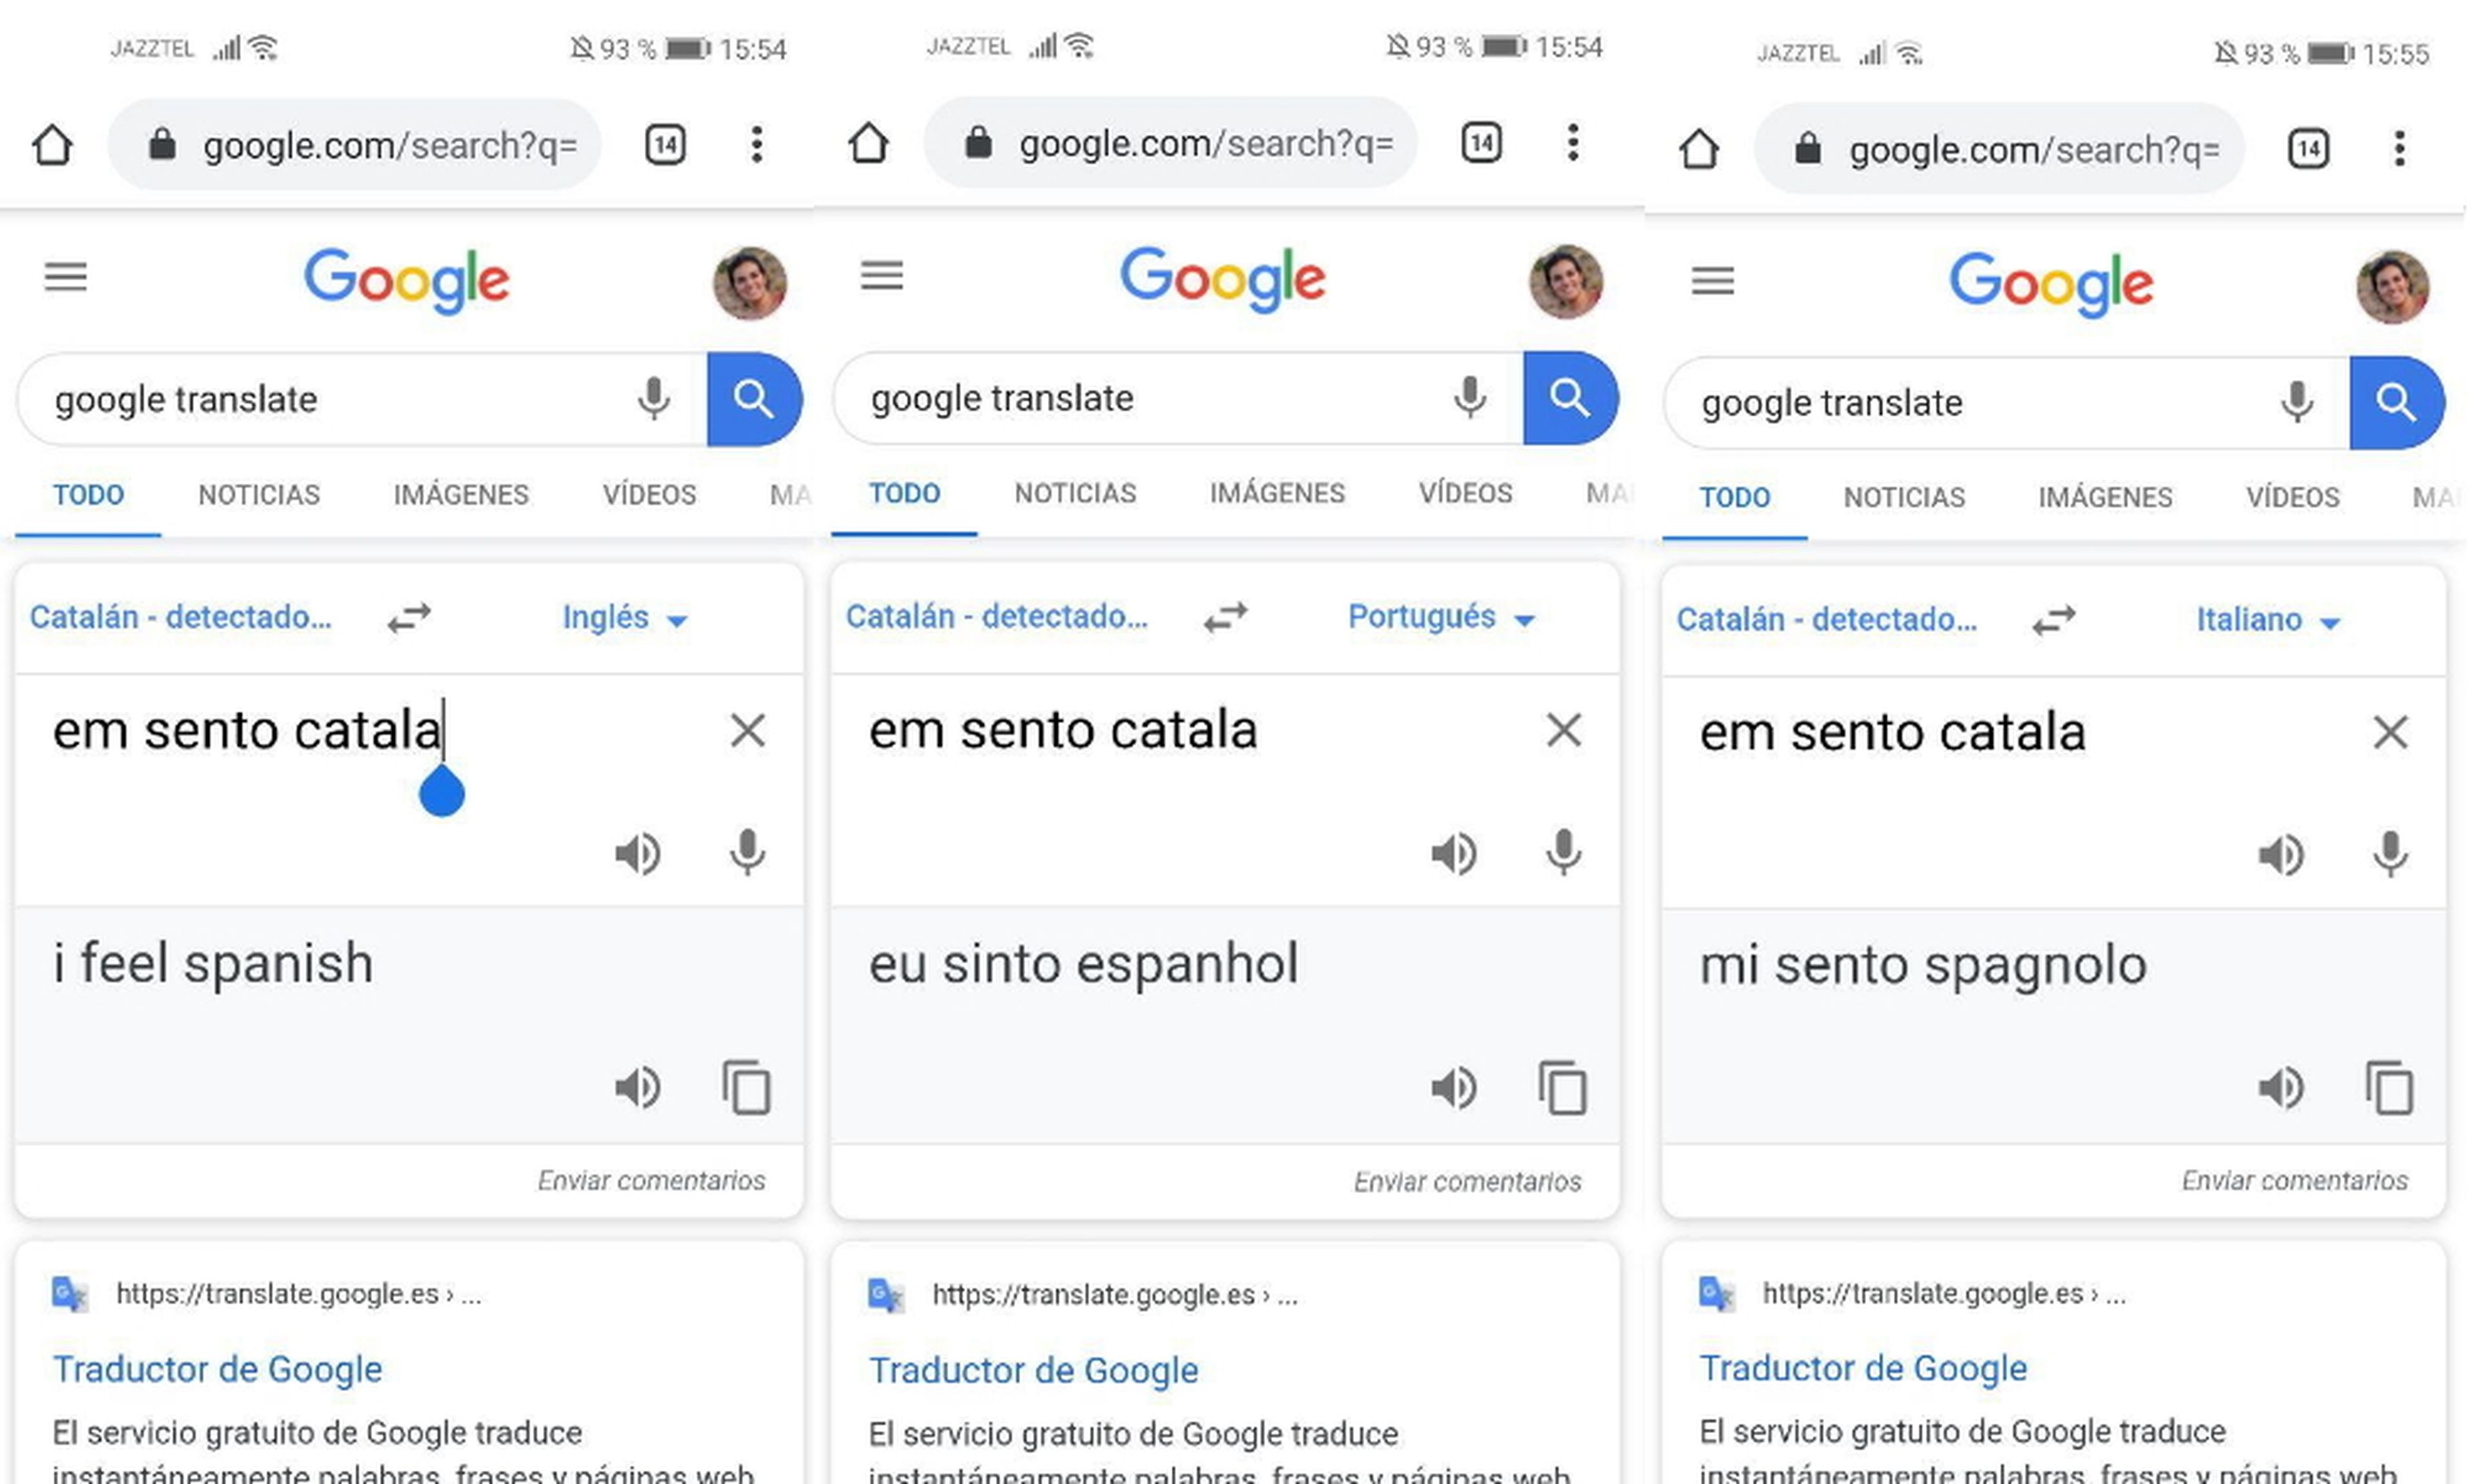 Google Translate "em sento catala"